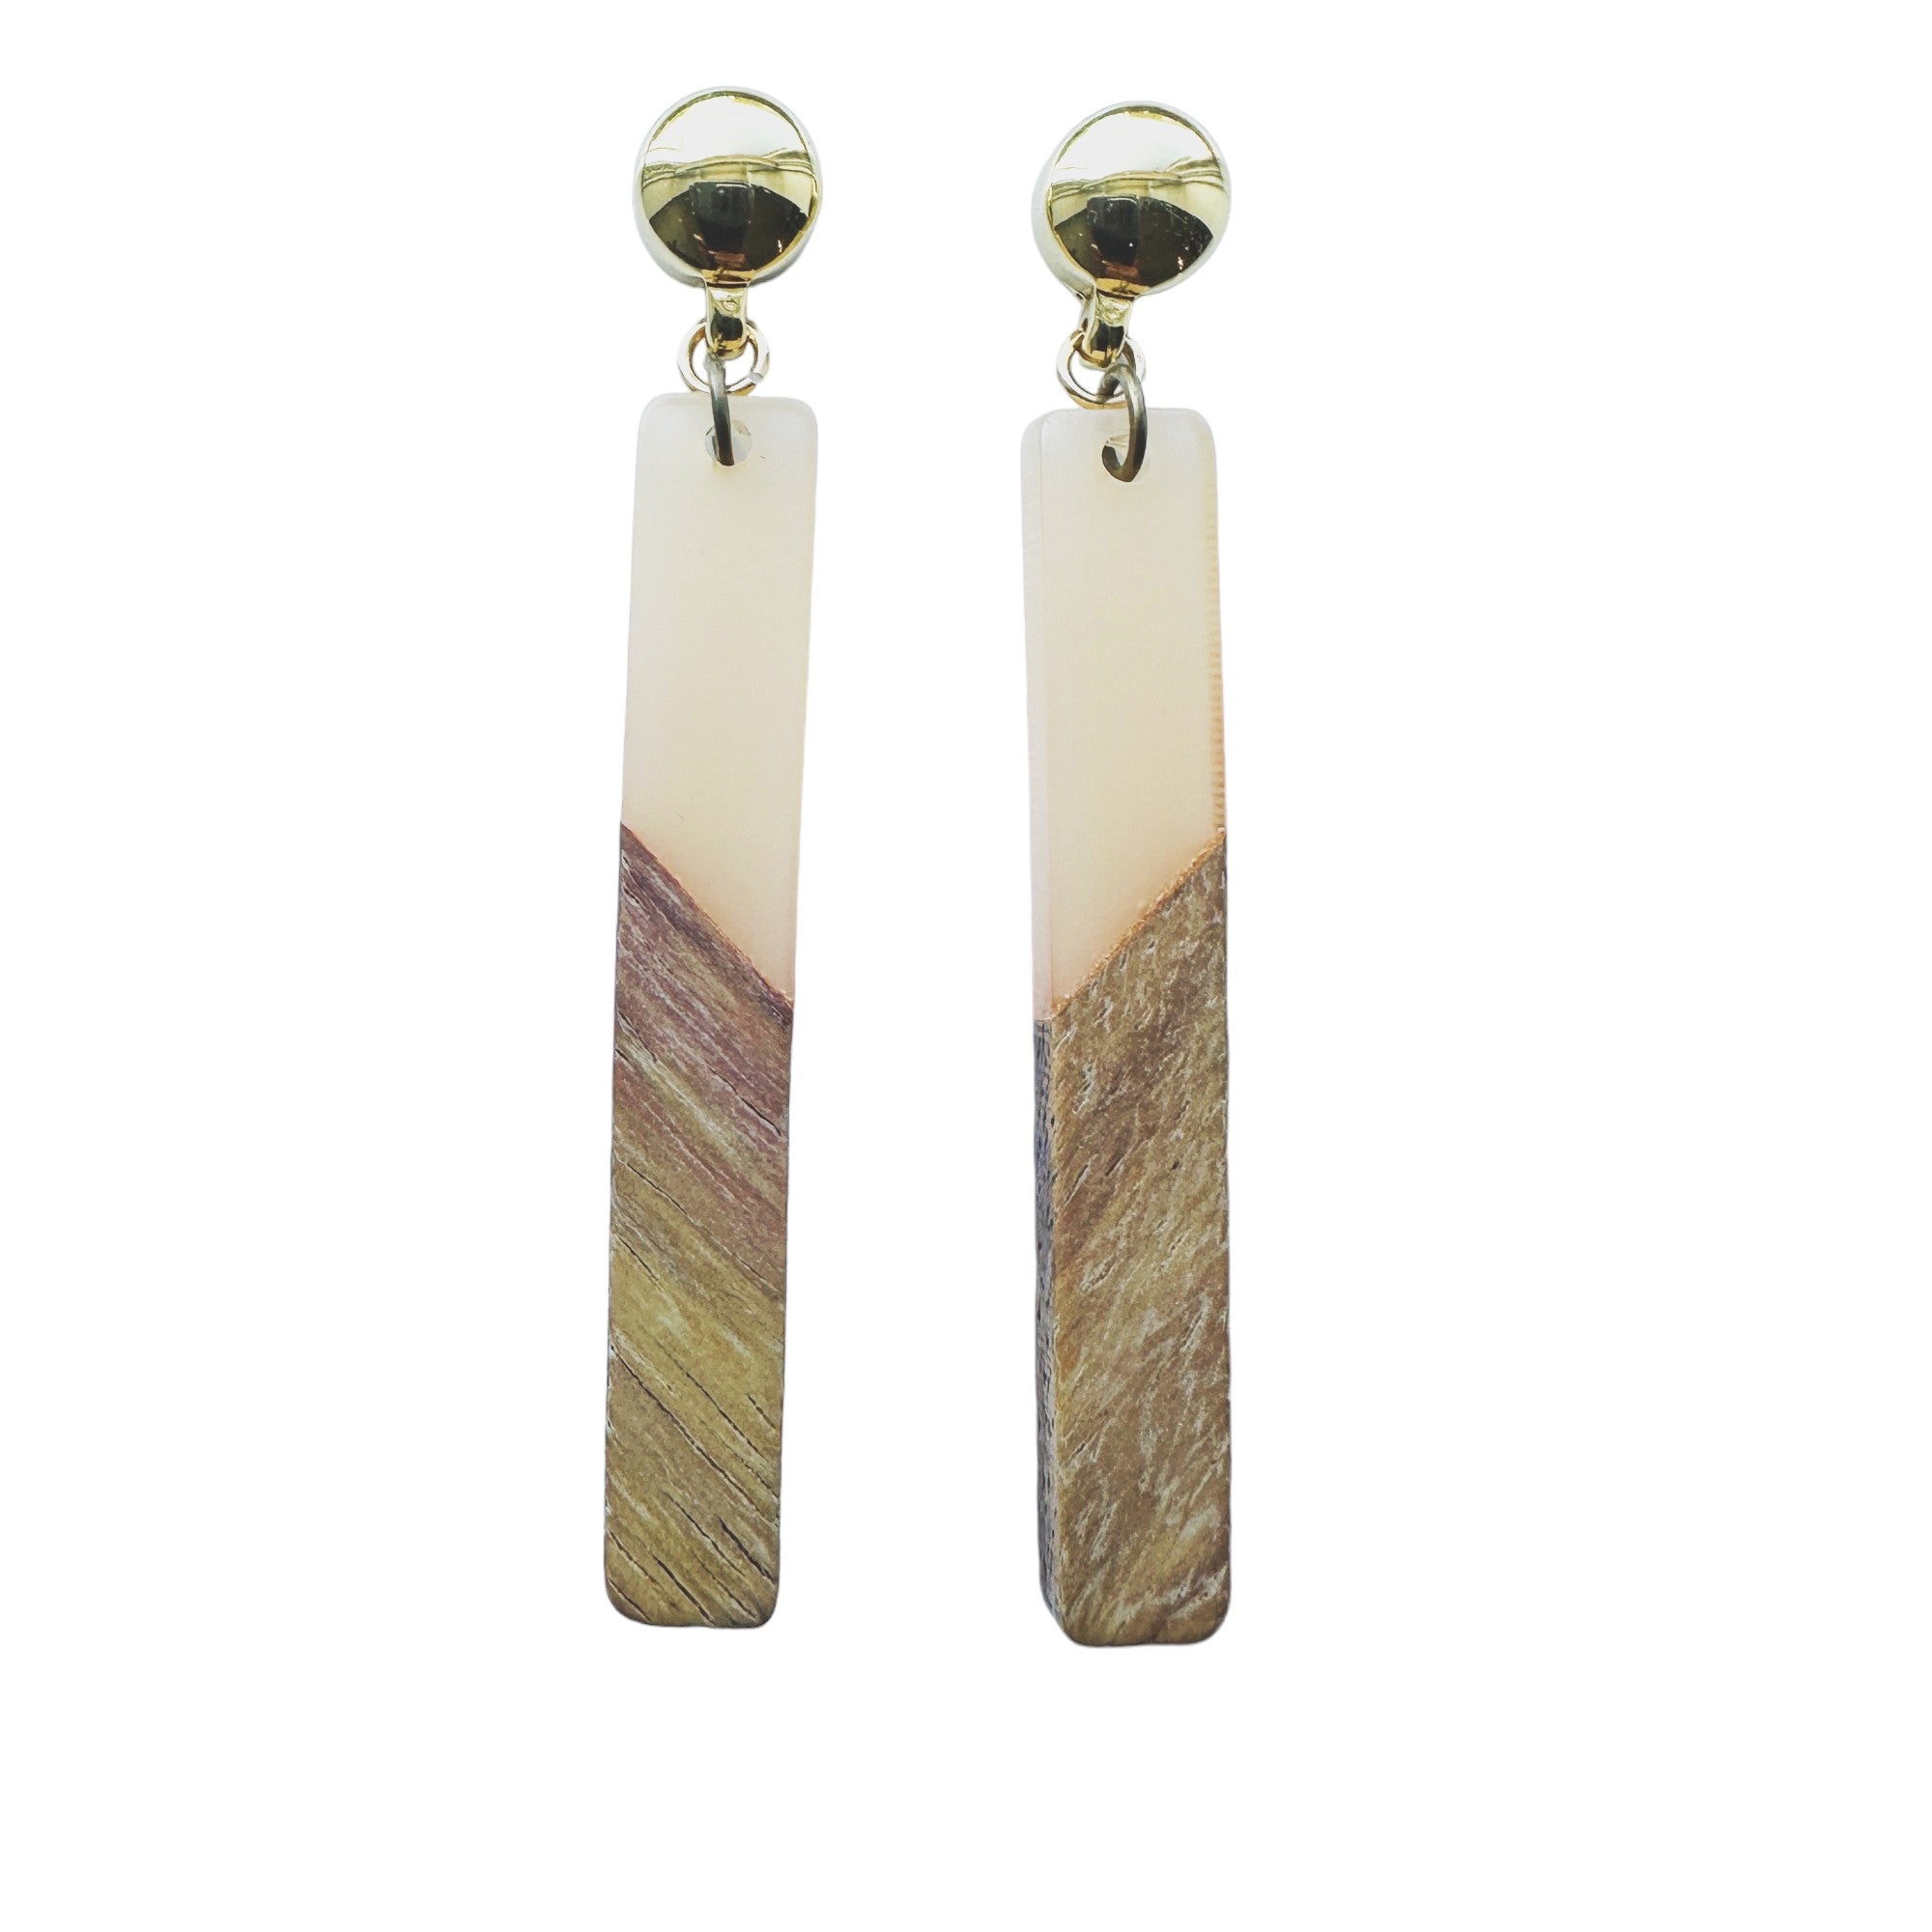 TI-GO translucent wood earrings